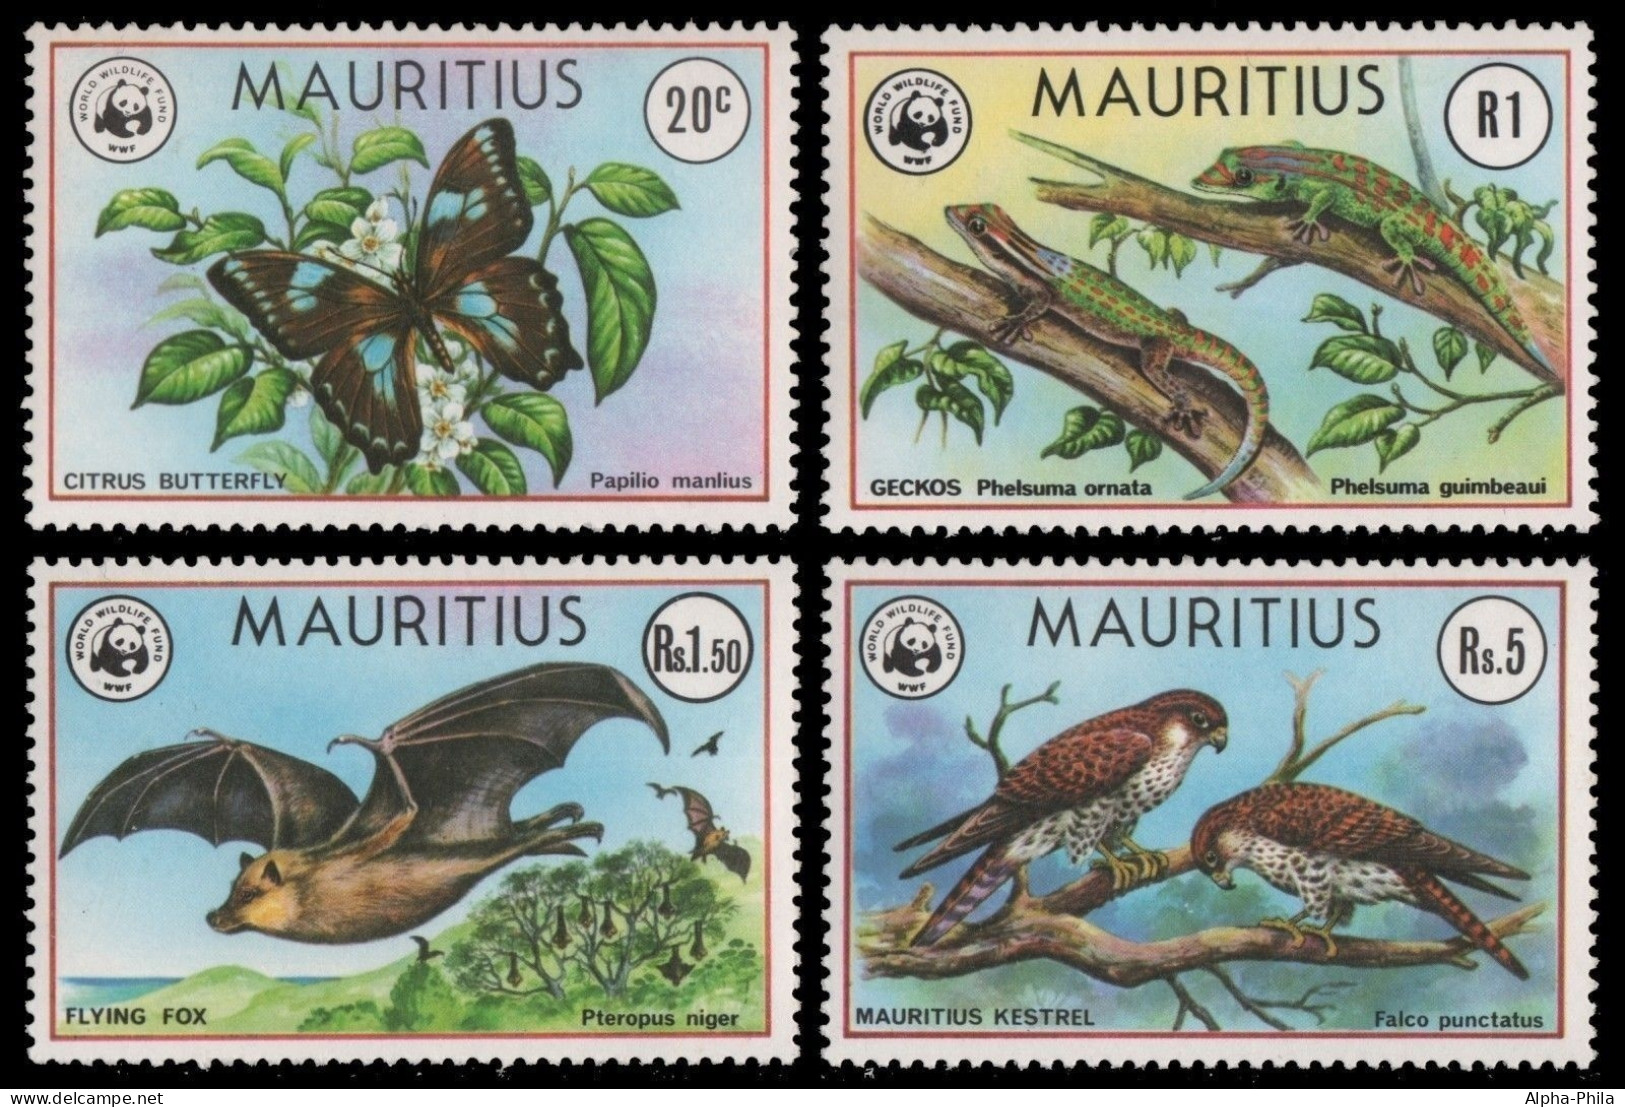 Mauritius 1978 - Mi-Nr. 463-466 ** - MNH - Wildtiere / Wild Animals - Maurice (1968-...)